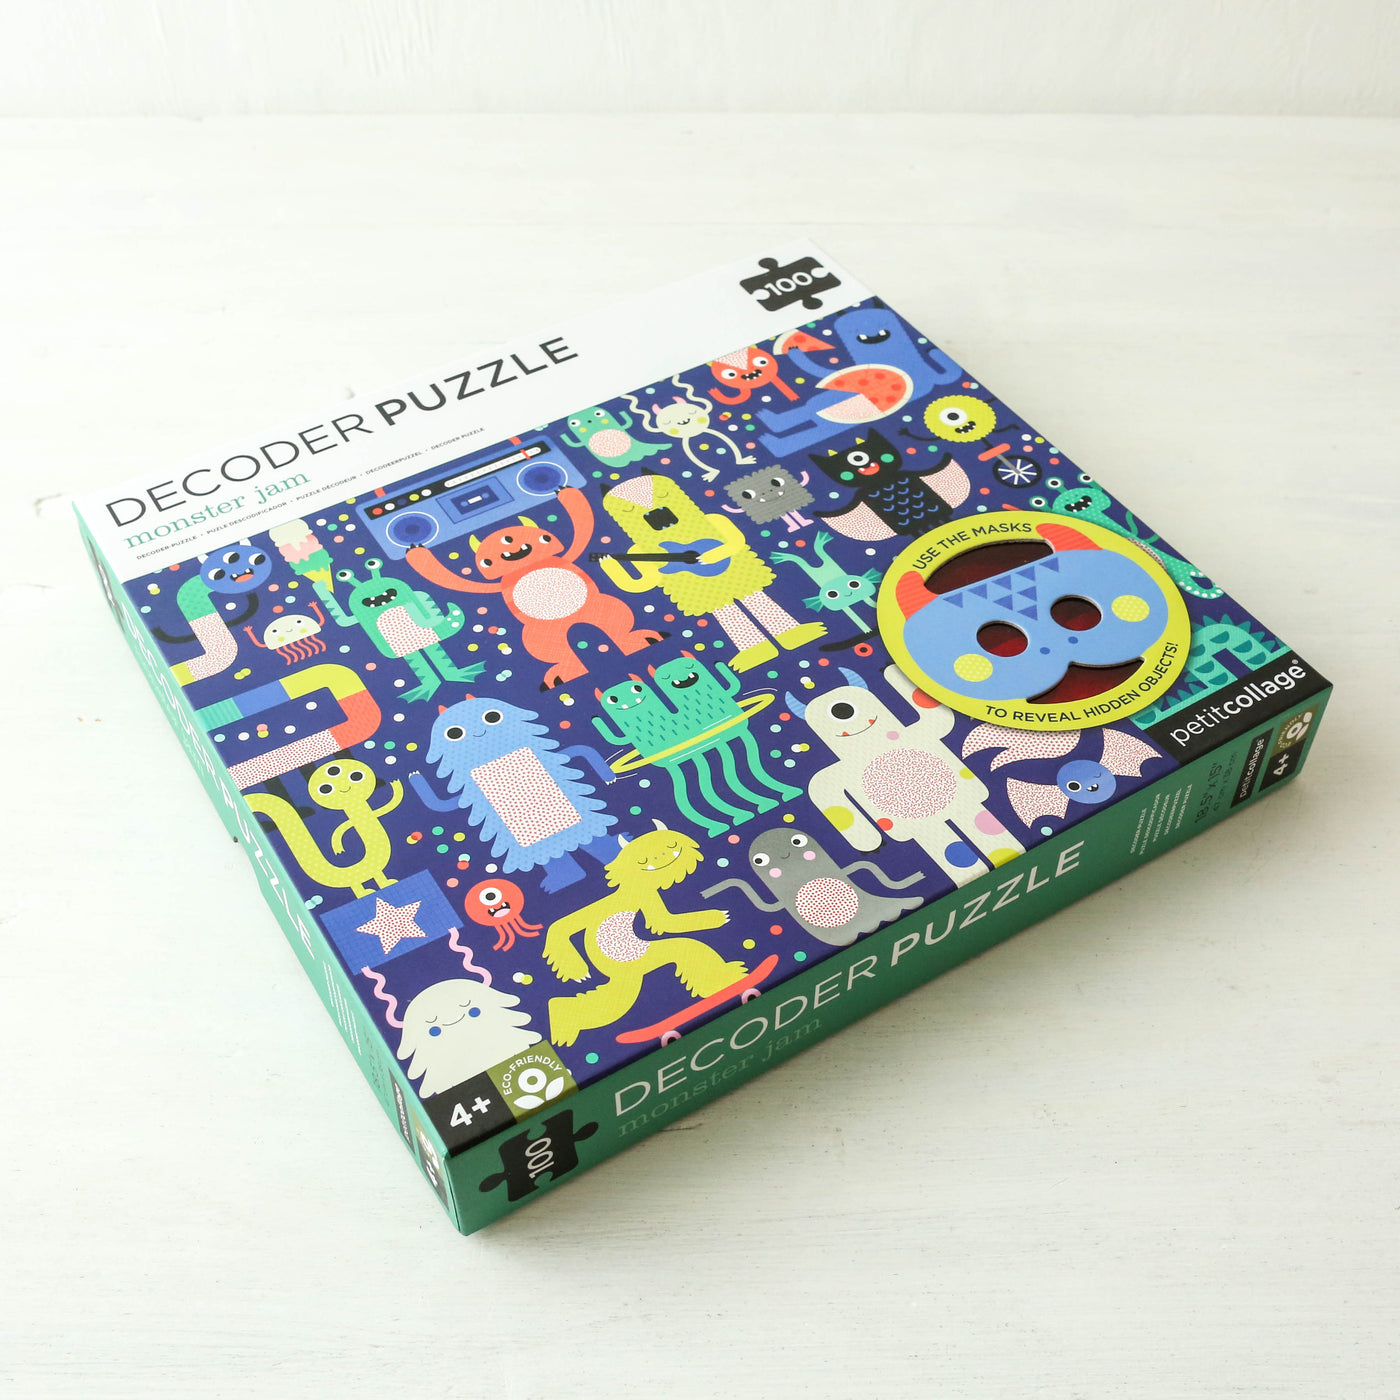 100 Piece Decoder Puzzle - Monster Jam